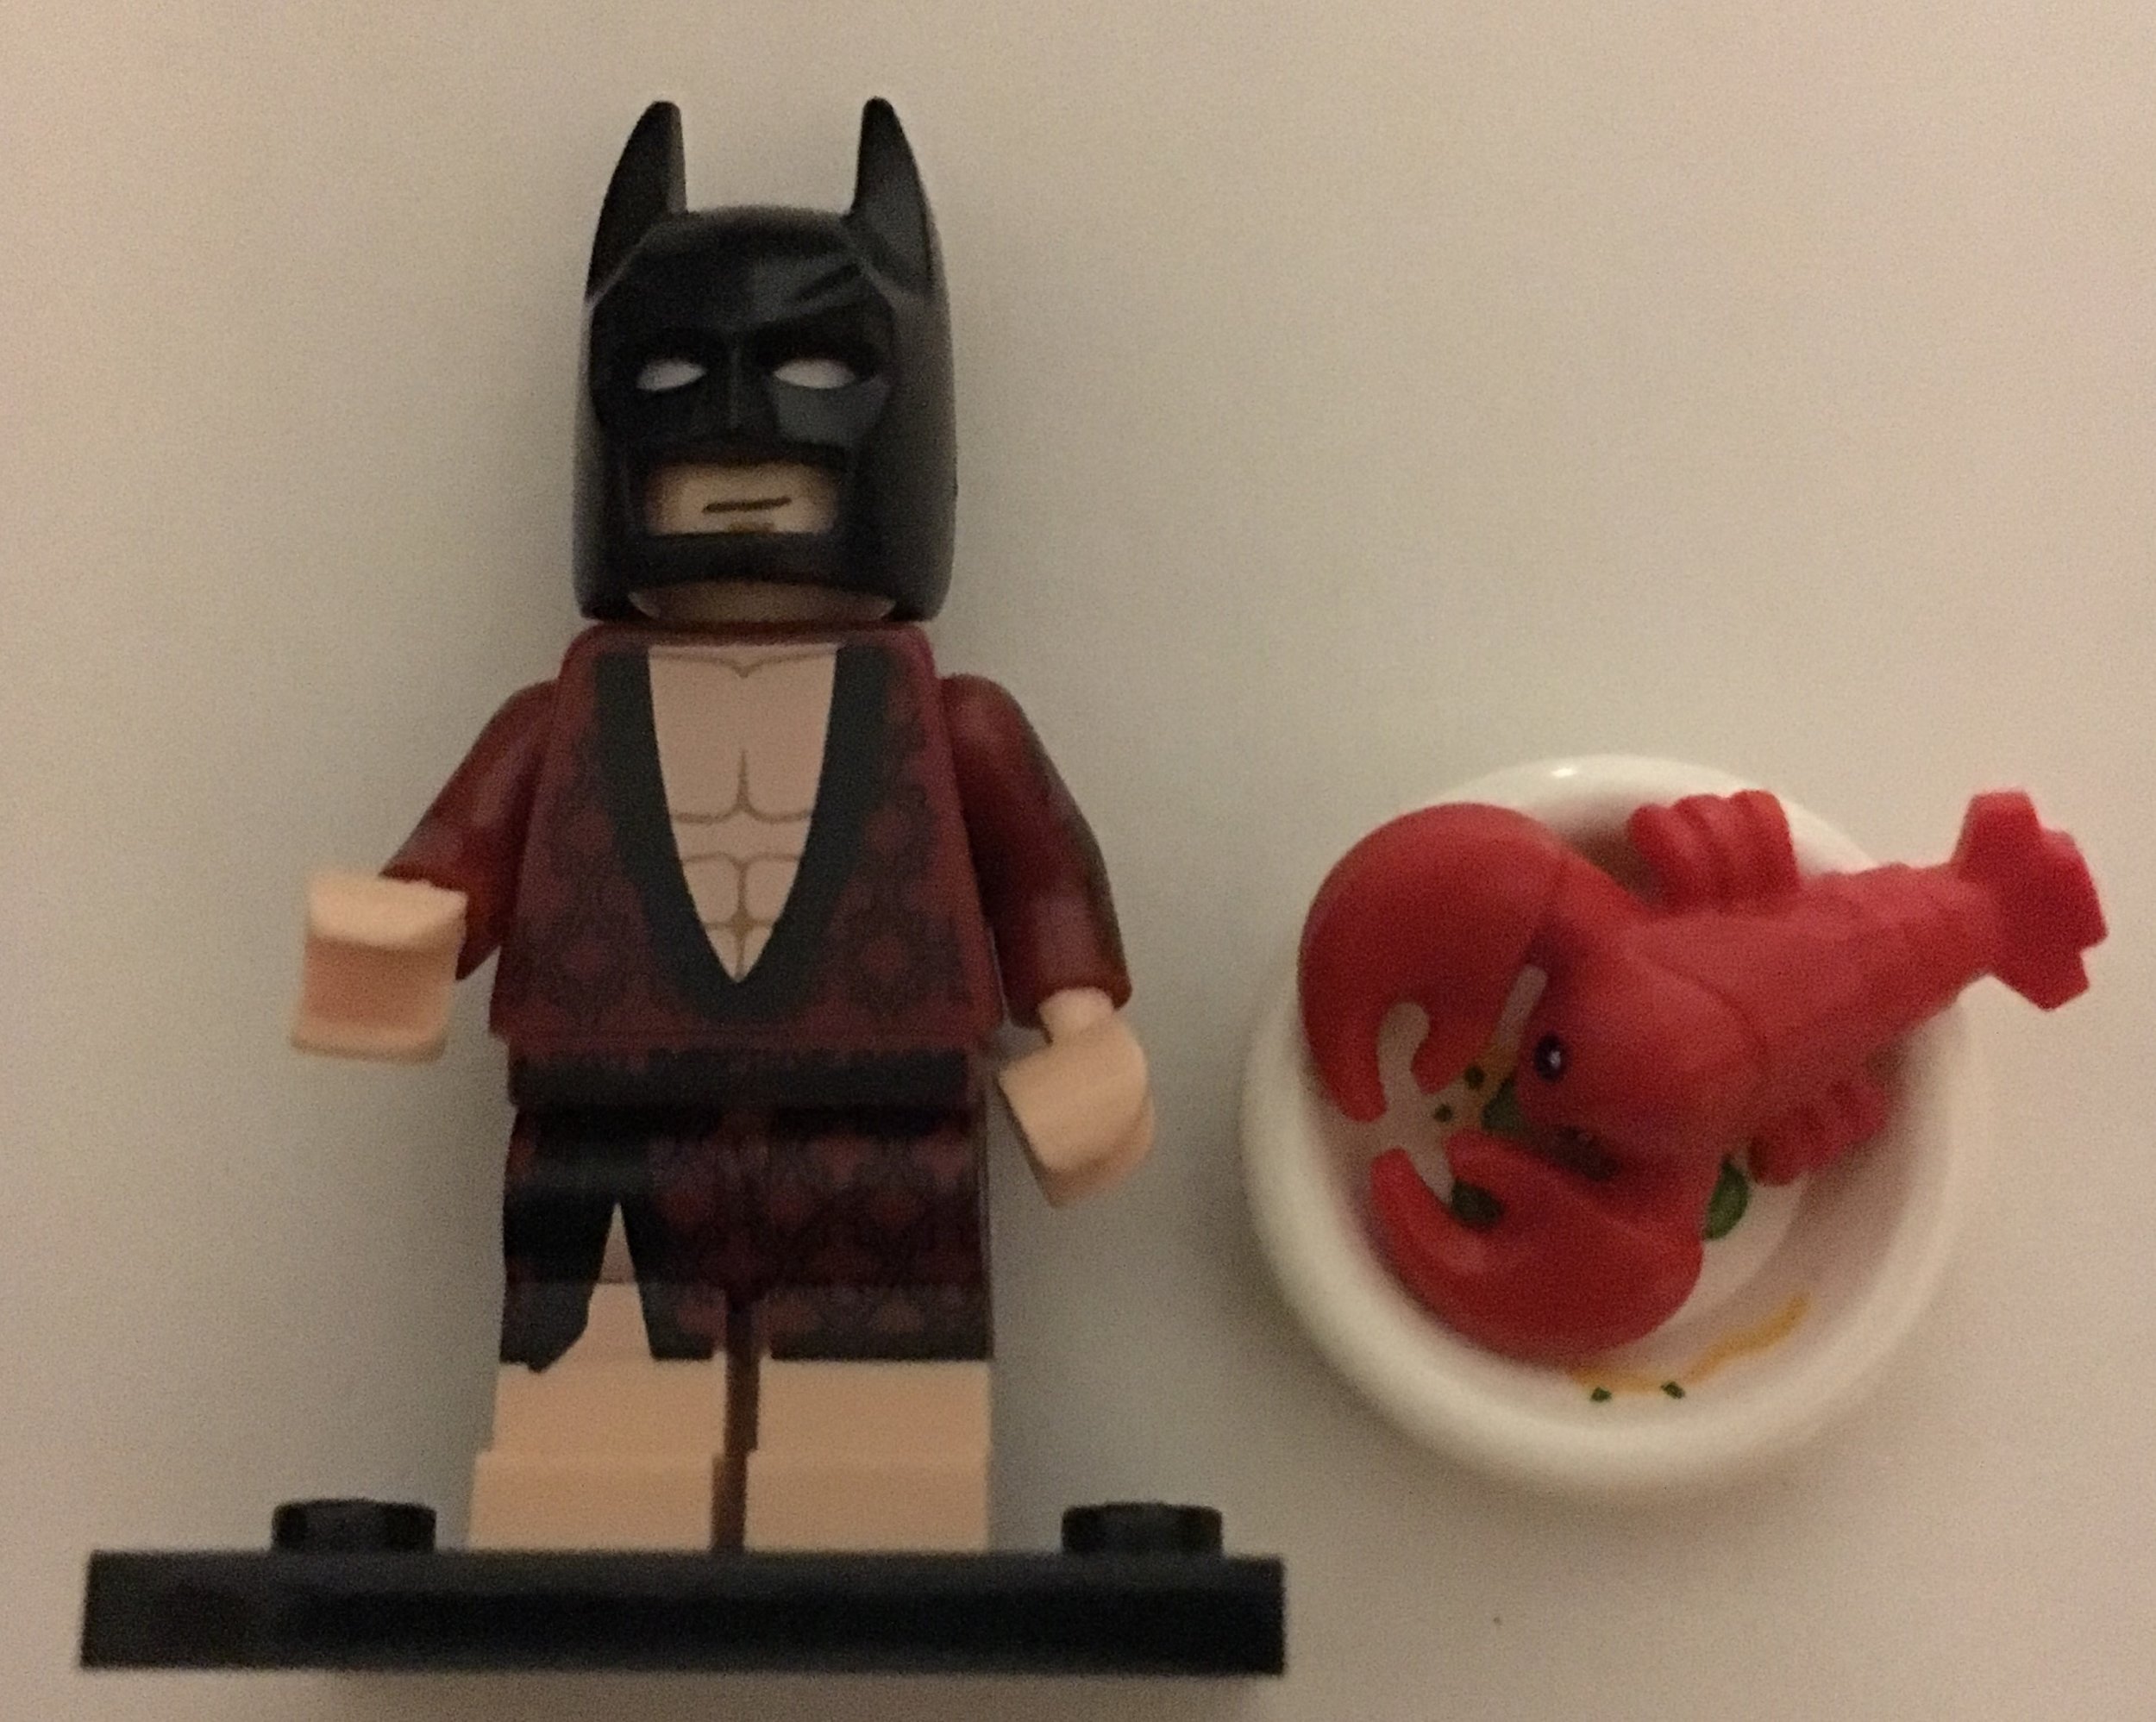 NEW Other - Lego Glam Metal Batman 71017 - LEGO Batman Movie Series 1  Minifigure